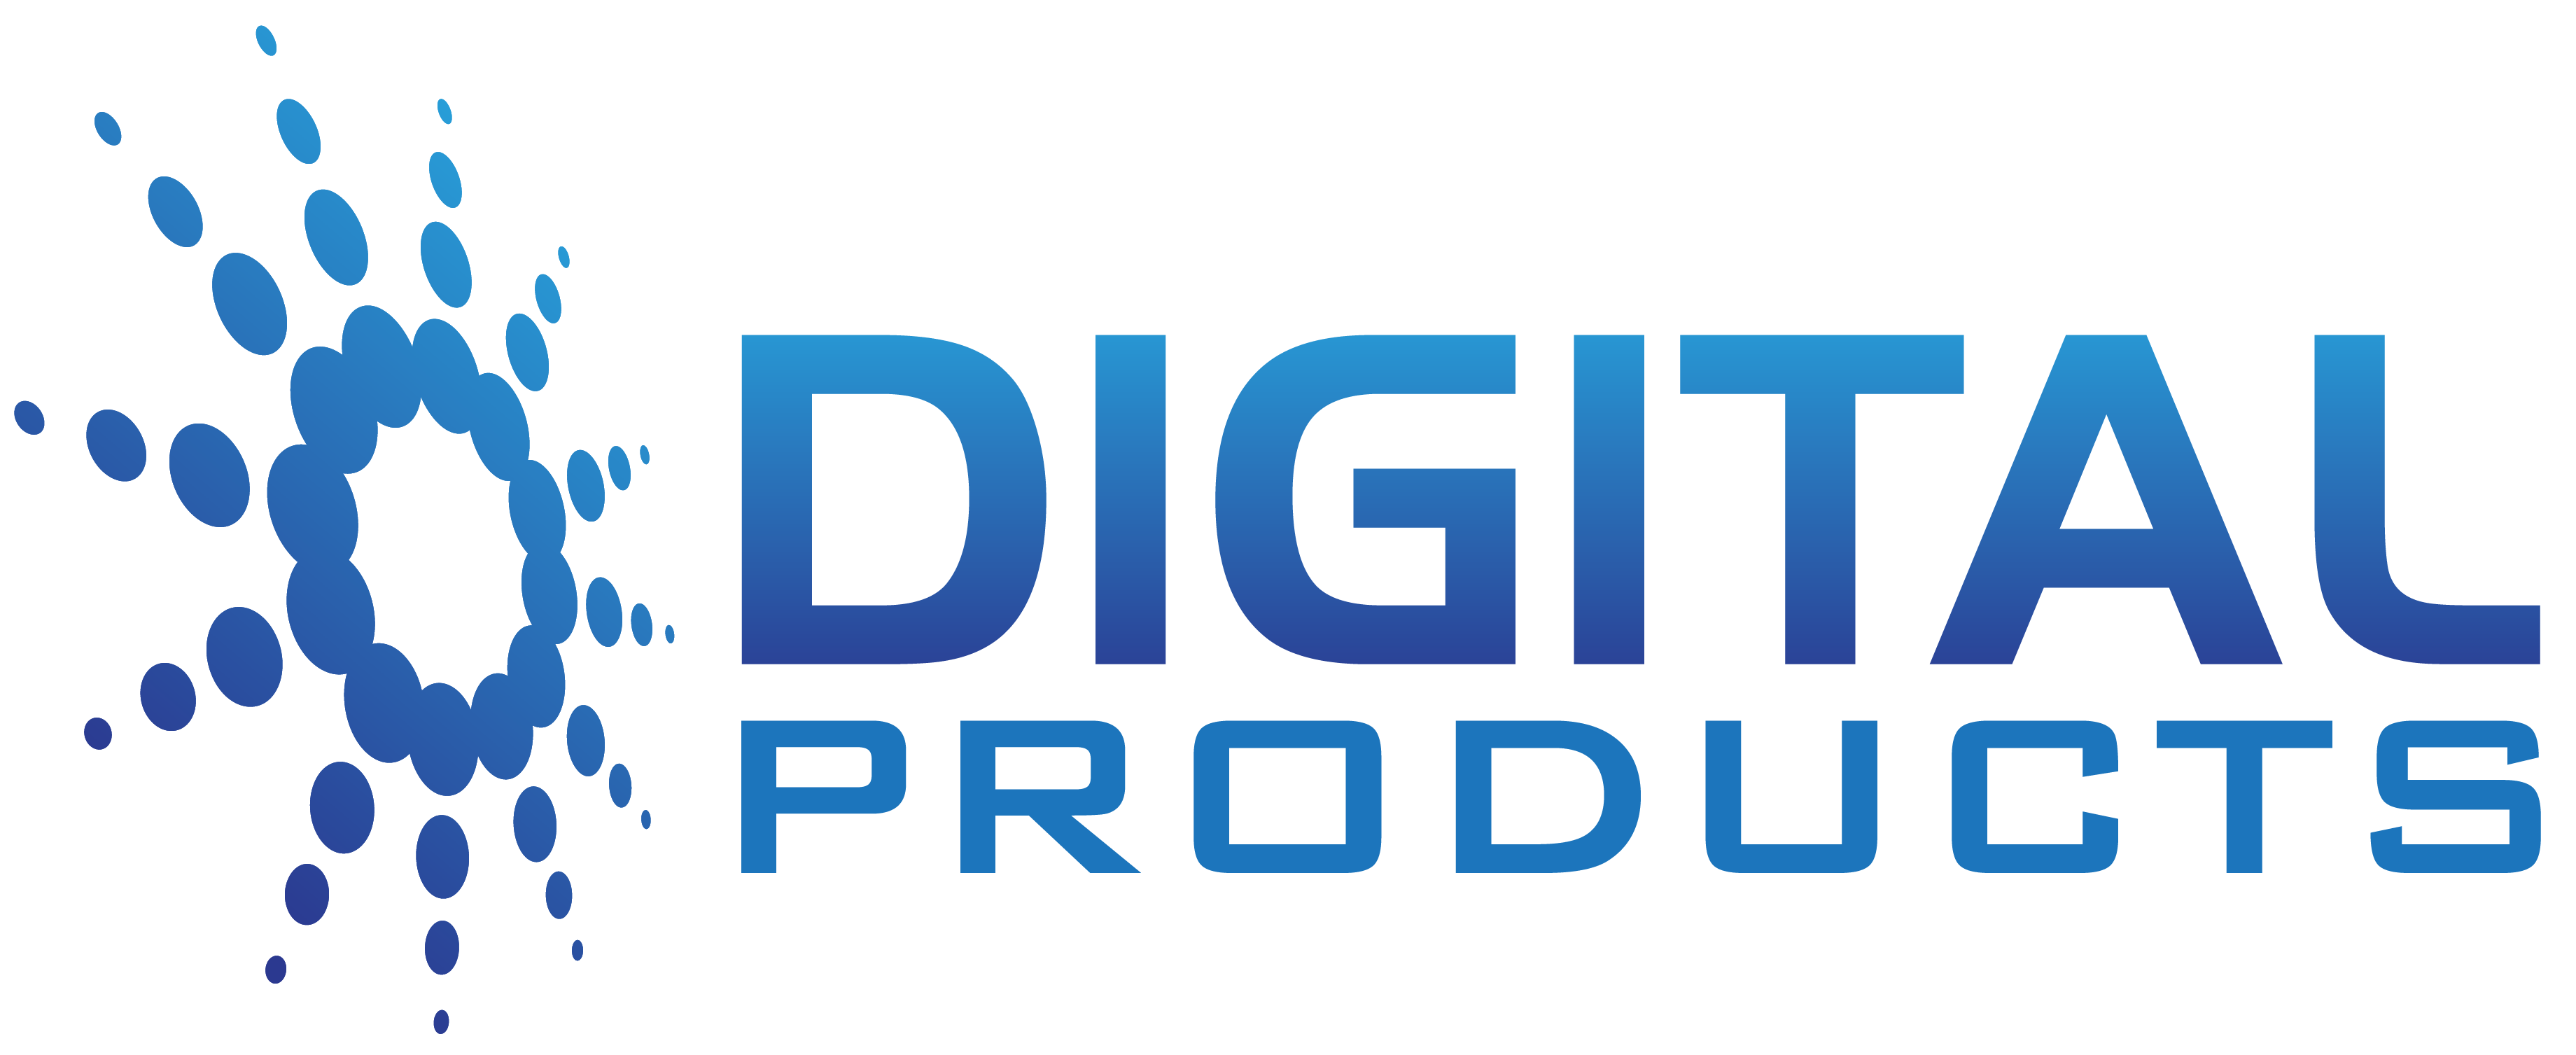 Digital продукт. Digital продукты. Логотип цифровые товары. Диджитал товары. Цифровые продукты картинка.